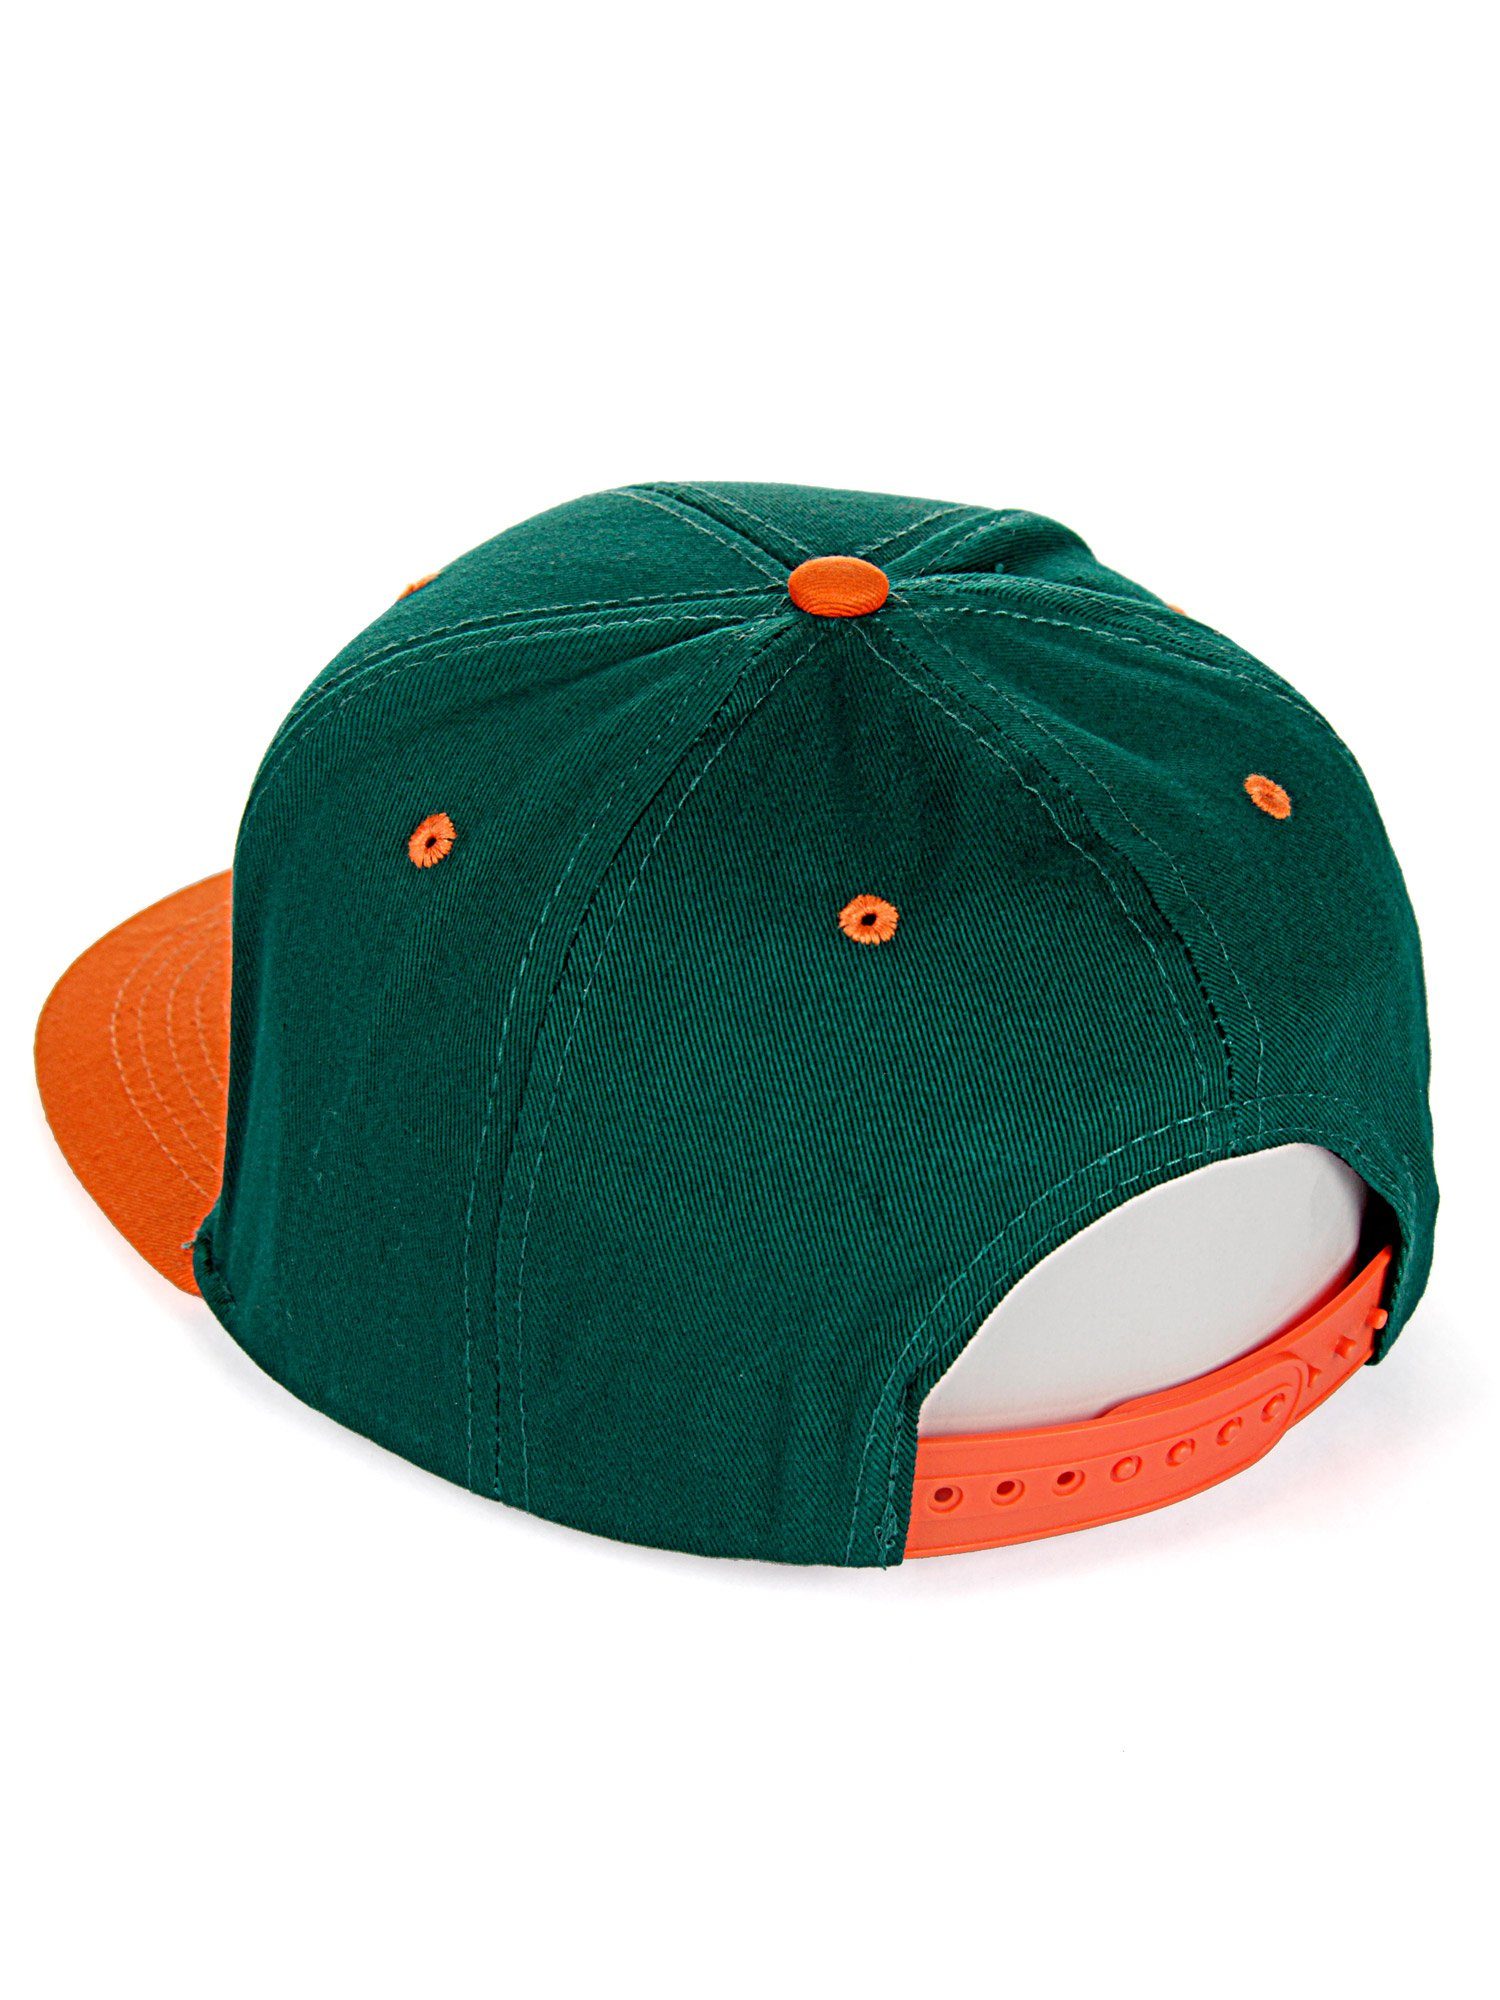 RedBridge Baseball mit grün-orange Schirm Sittingbourne kontrastfarbigem Cap